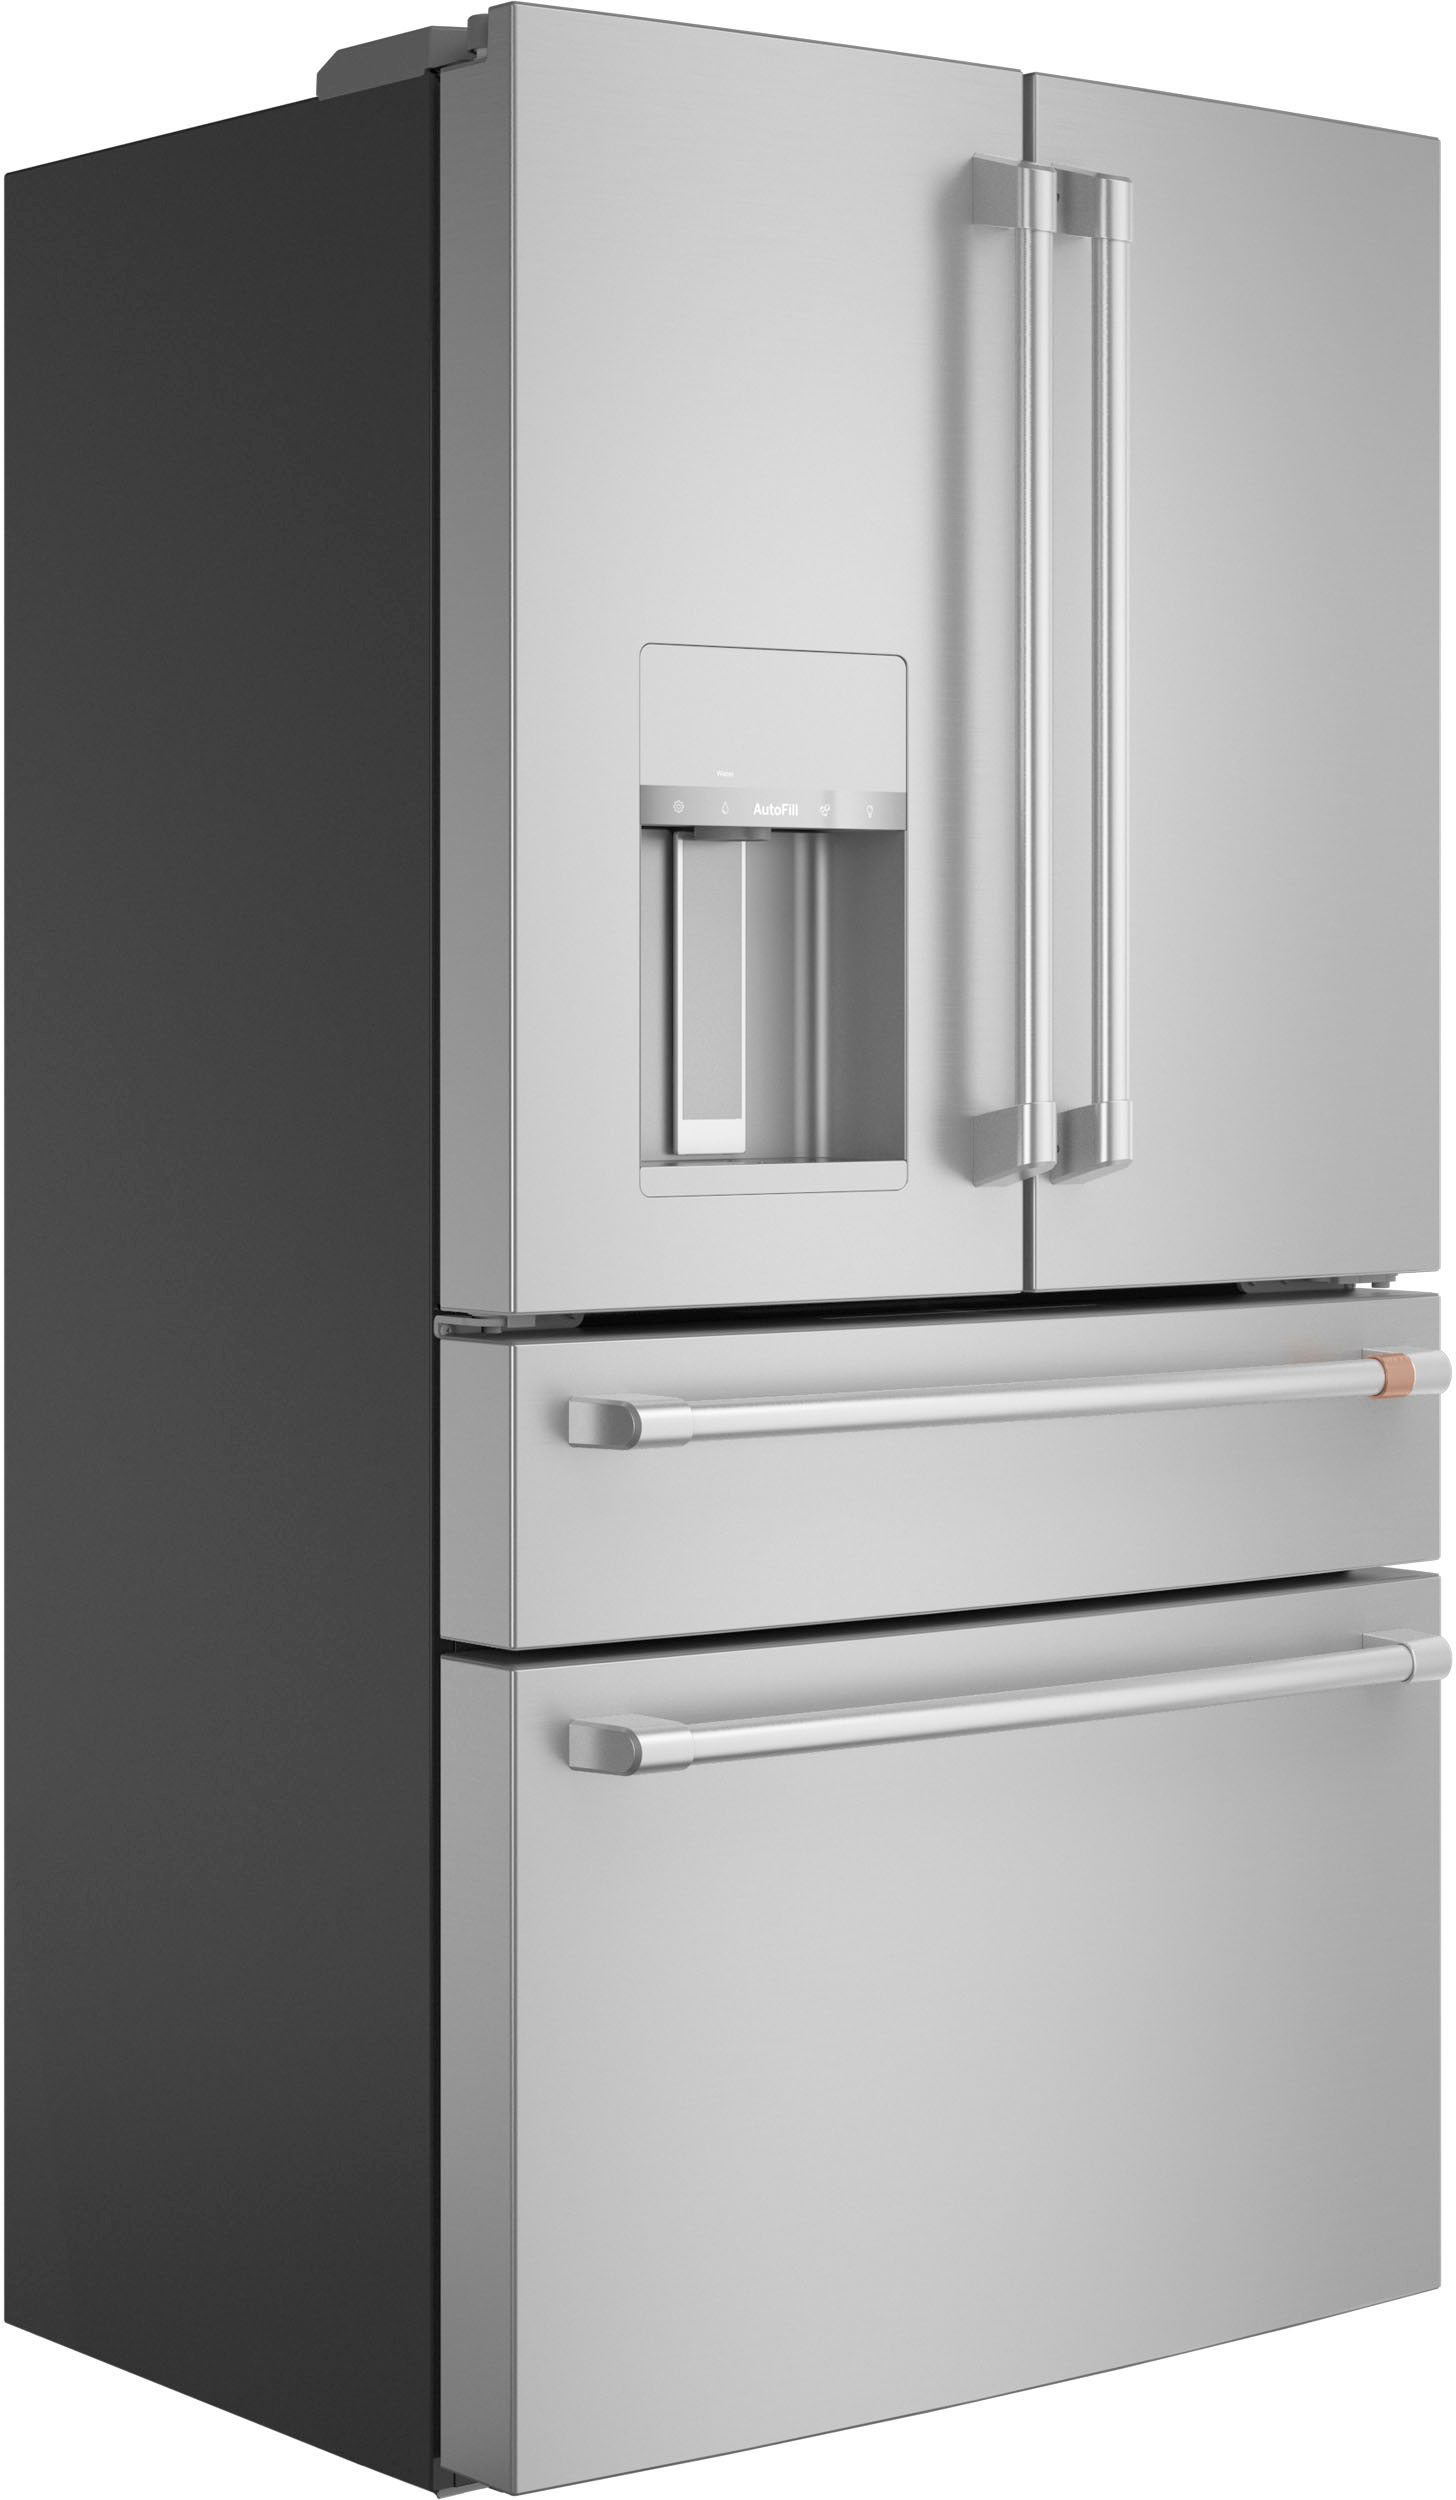 Angle View: Café - 22.3 Cu. Ft. 4-Door French Door Counter-Depth Smart Refrigerator - Stainless steel